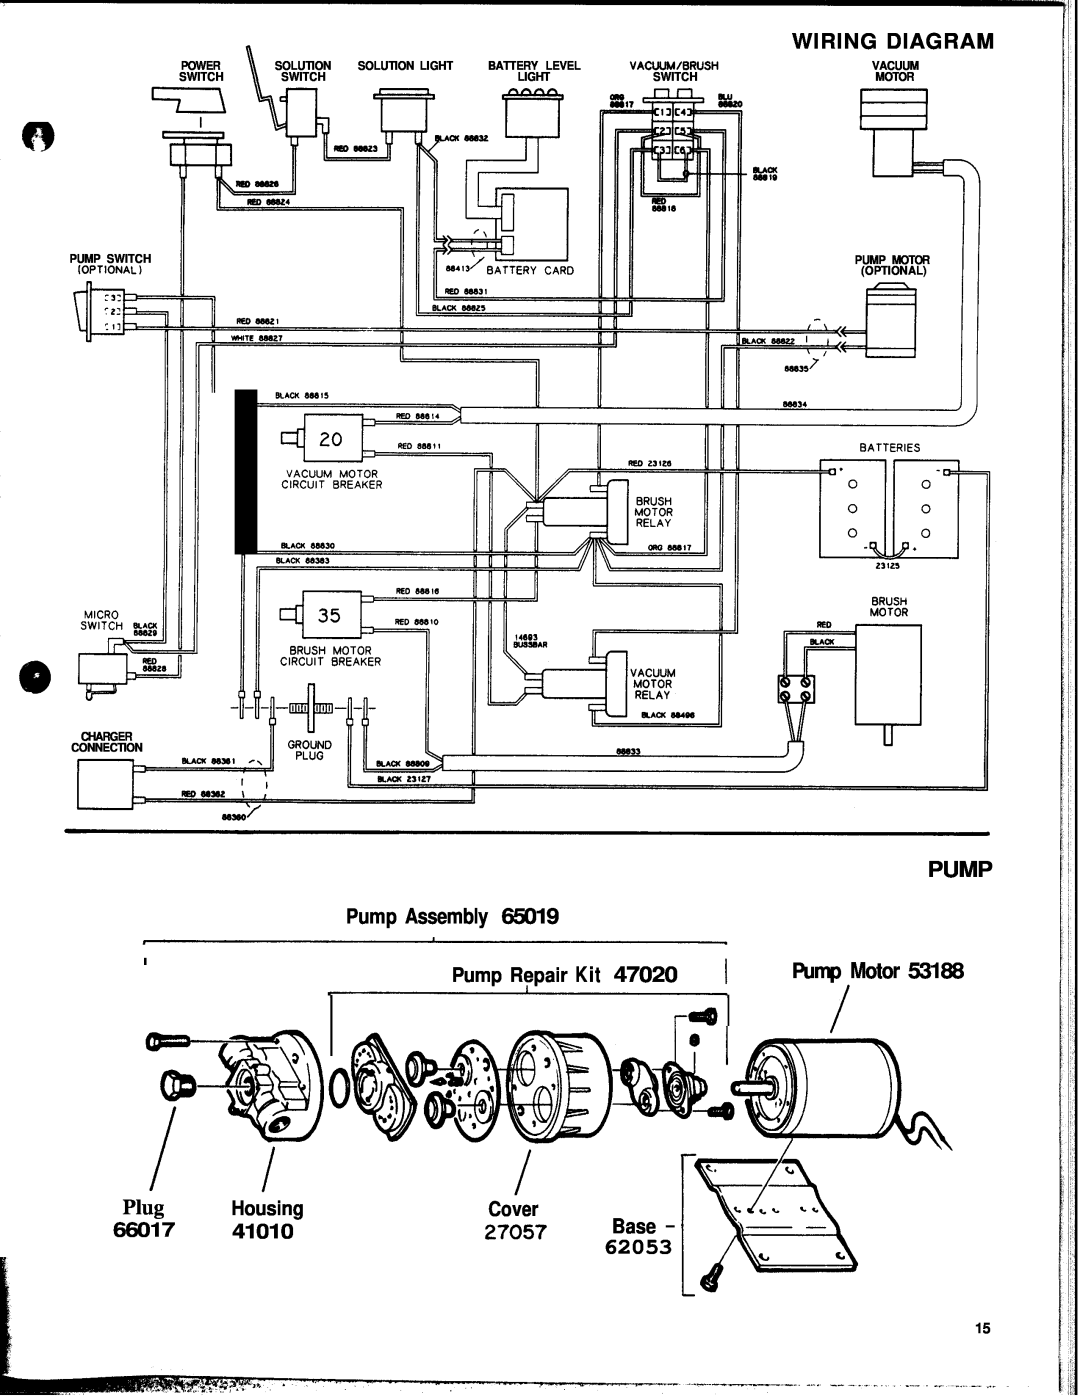 Windsor PTC20 27057, Wiring Diagram, Pump Assembly, 41010, Pump Motor, Pump Repair Kit, Housing, Cover, Power, Switch 